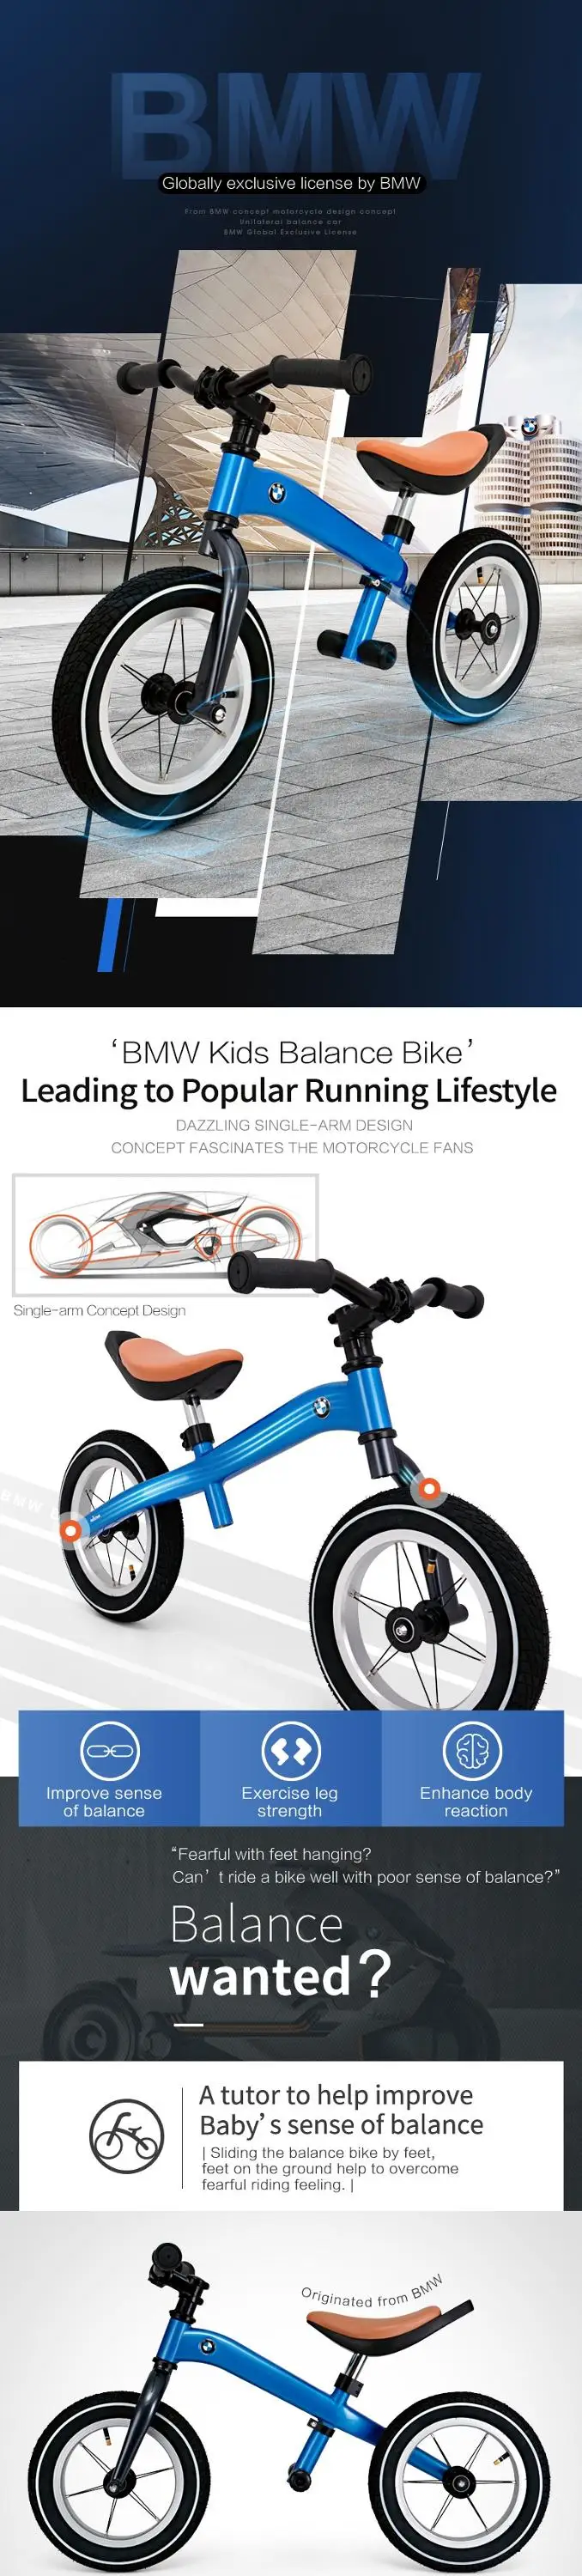 bmw balance bike